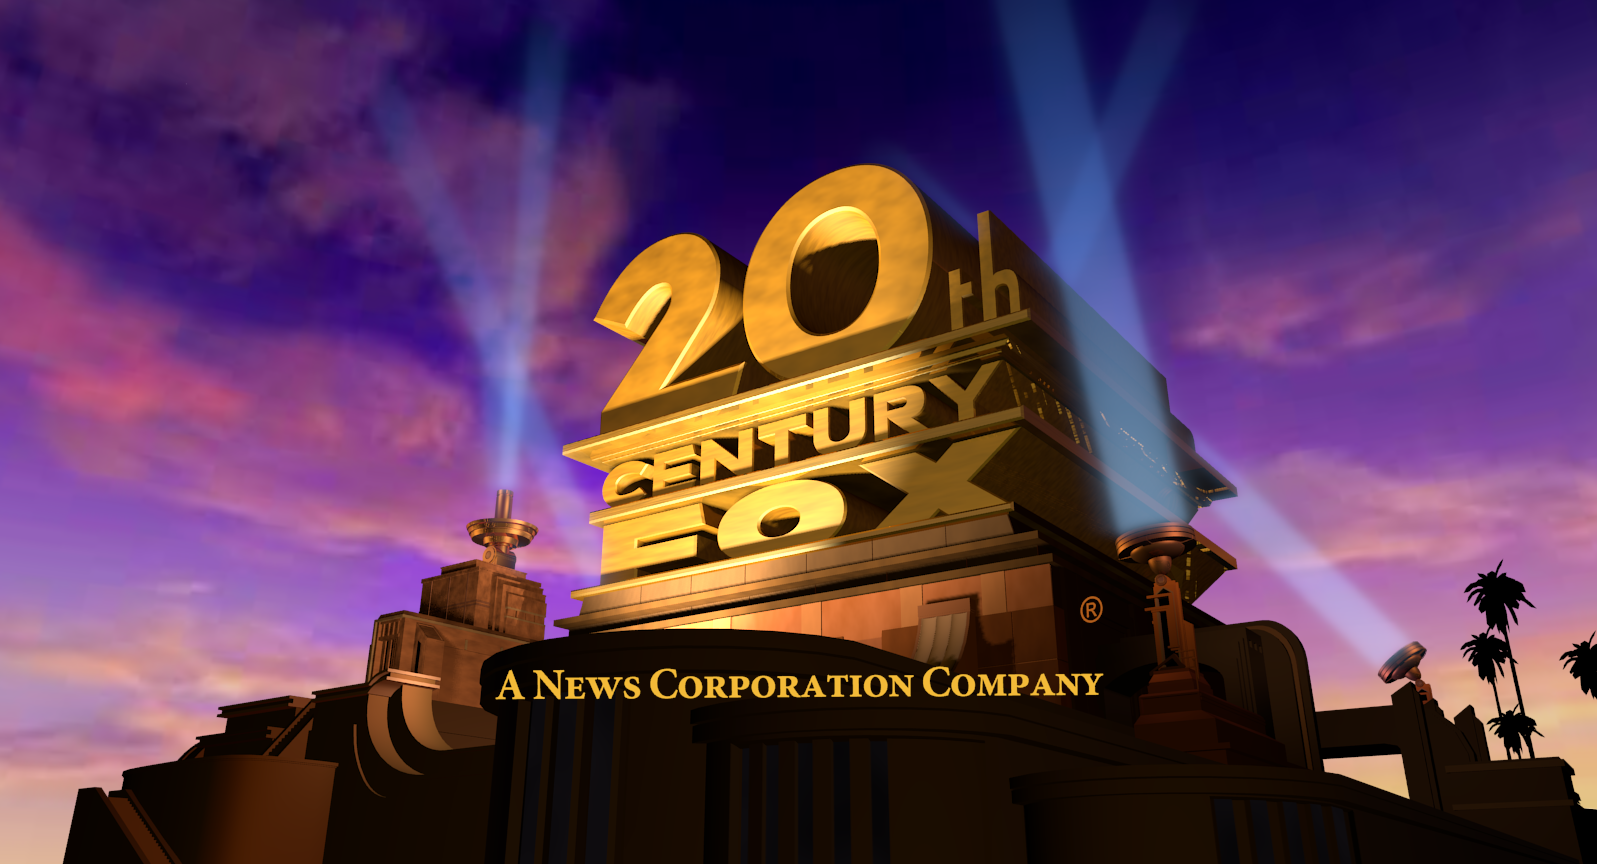 Cinematic 20th Century Fox logo remake by xXNeoJadenXx on DeviantArt